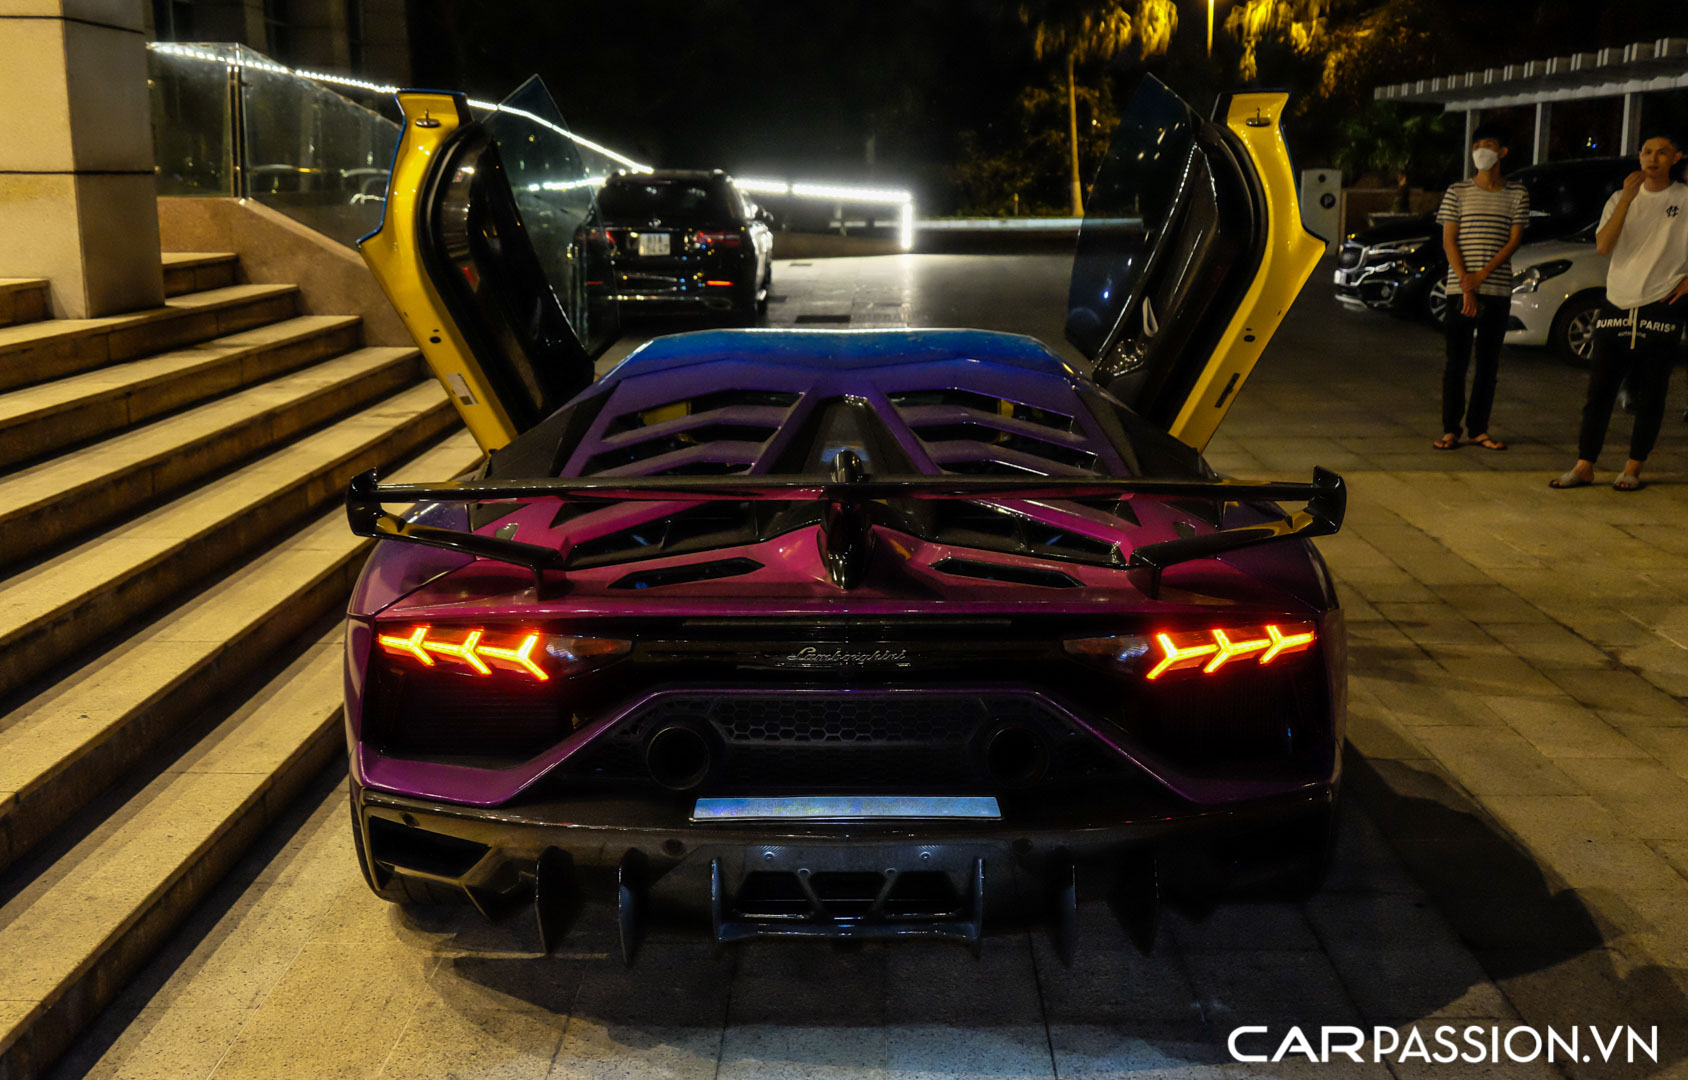 CP-Lamborghini Aventador SVJ bảy sắc cầu vồng20.jpg